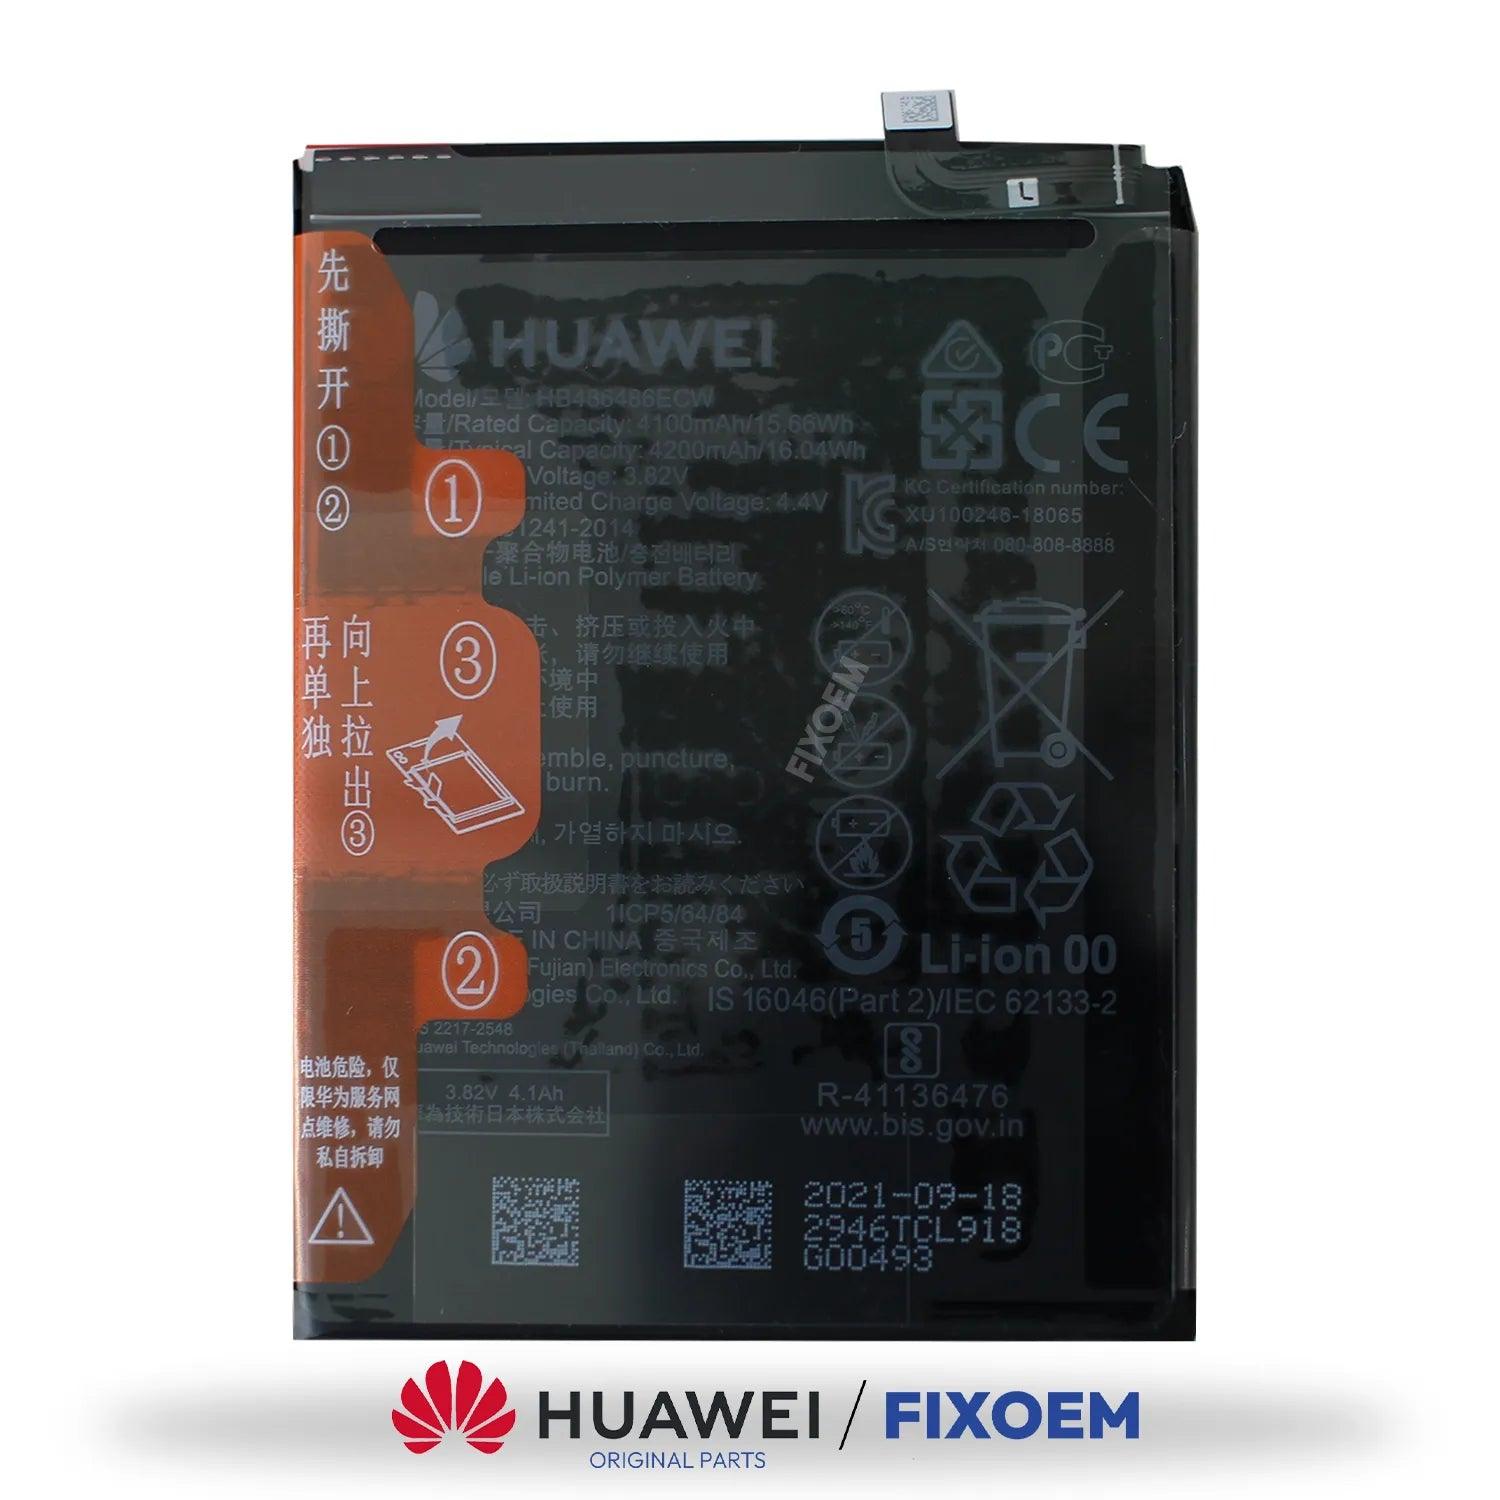 Bateria Huawei Mate 20 Pro Lya-L09 / P30 Pro Vog-L04 Hb486486Ecw. |+2,000 reseñas 4.8/5 ⭐